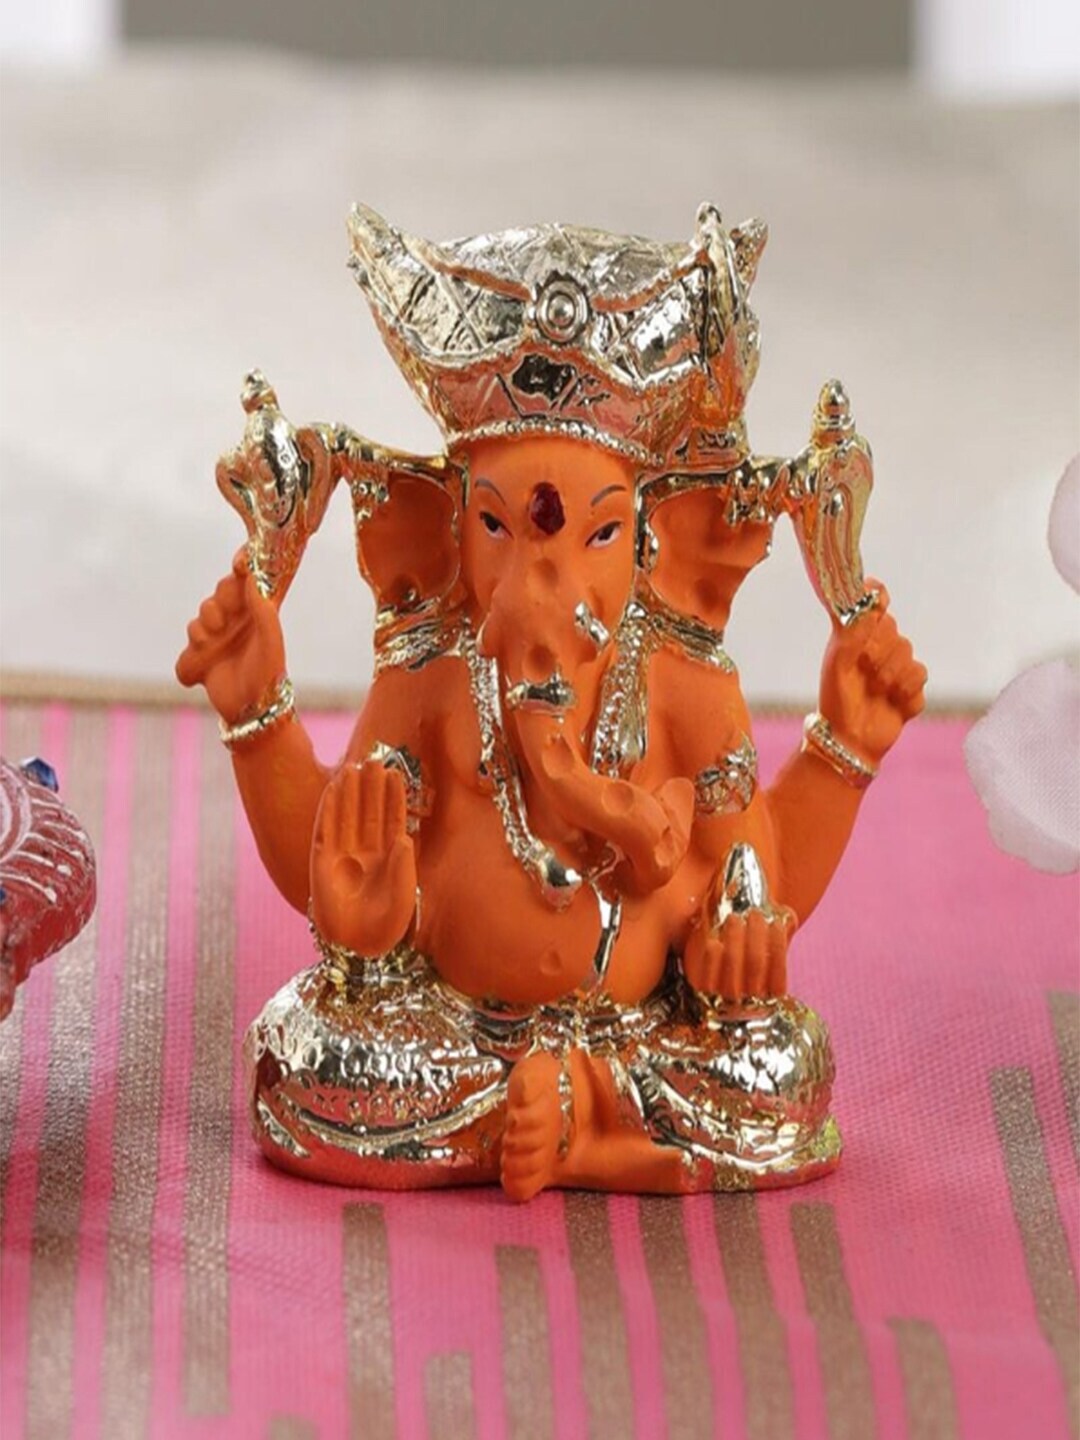 Gallery99 Gold-Toned & Orange Lord Ganpati Idol Showpiece Price in India